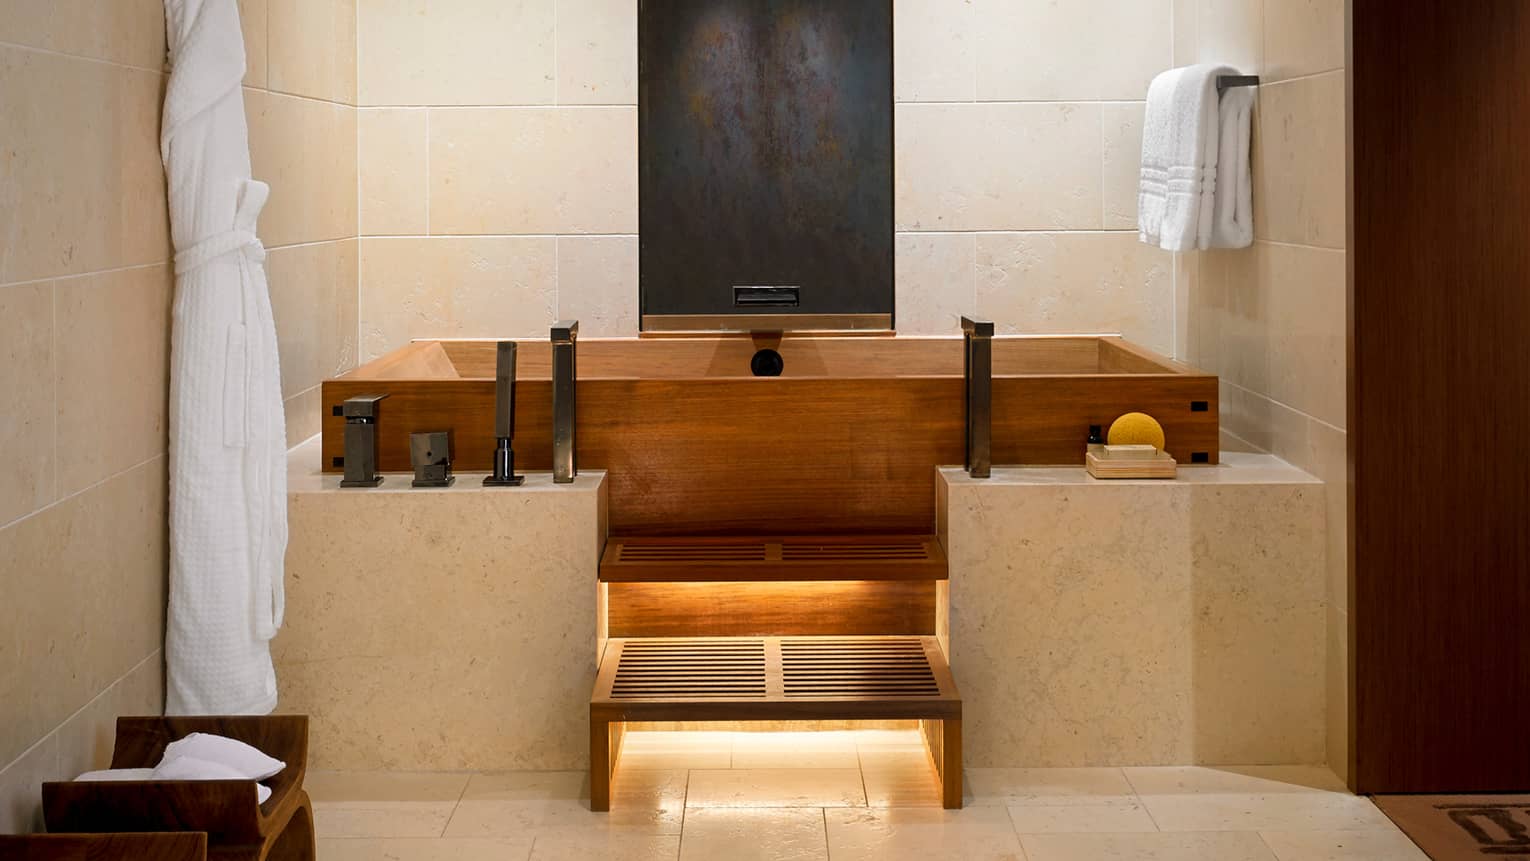 Alii Royal Suite master bathroom with modern wood Japanese soaking tub, marble ledge, tile walls